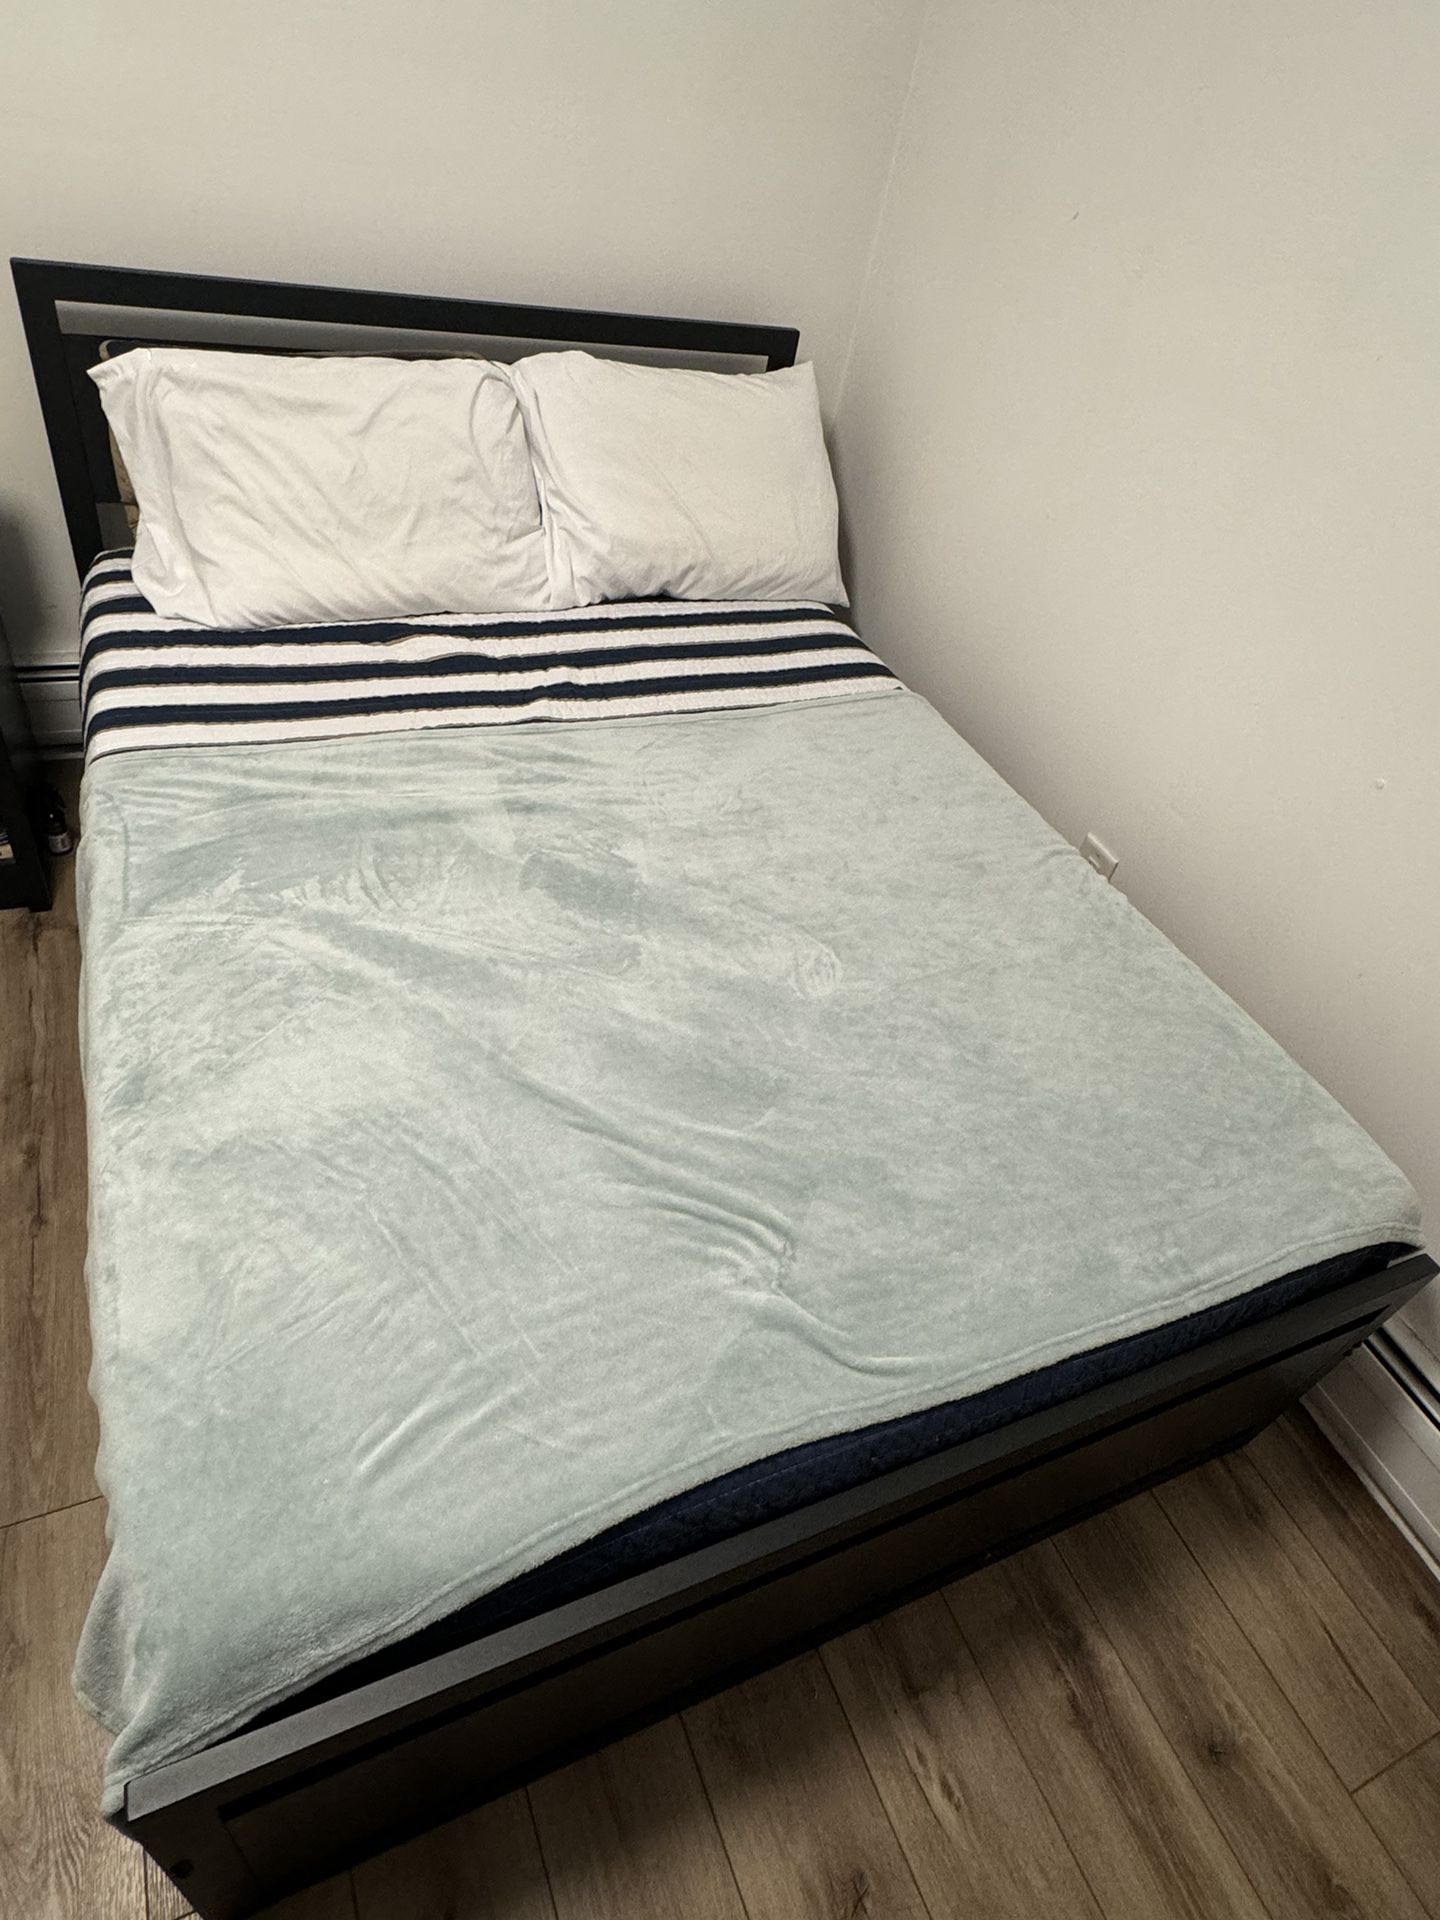 Sleep Innovations Memory Foam Mattress & Bed Frame Brown & Black Full Size 